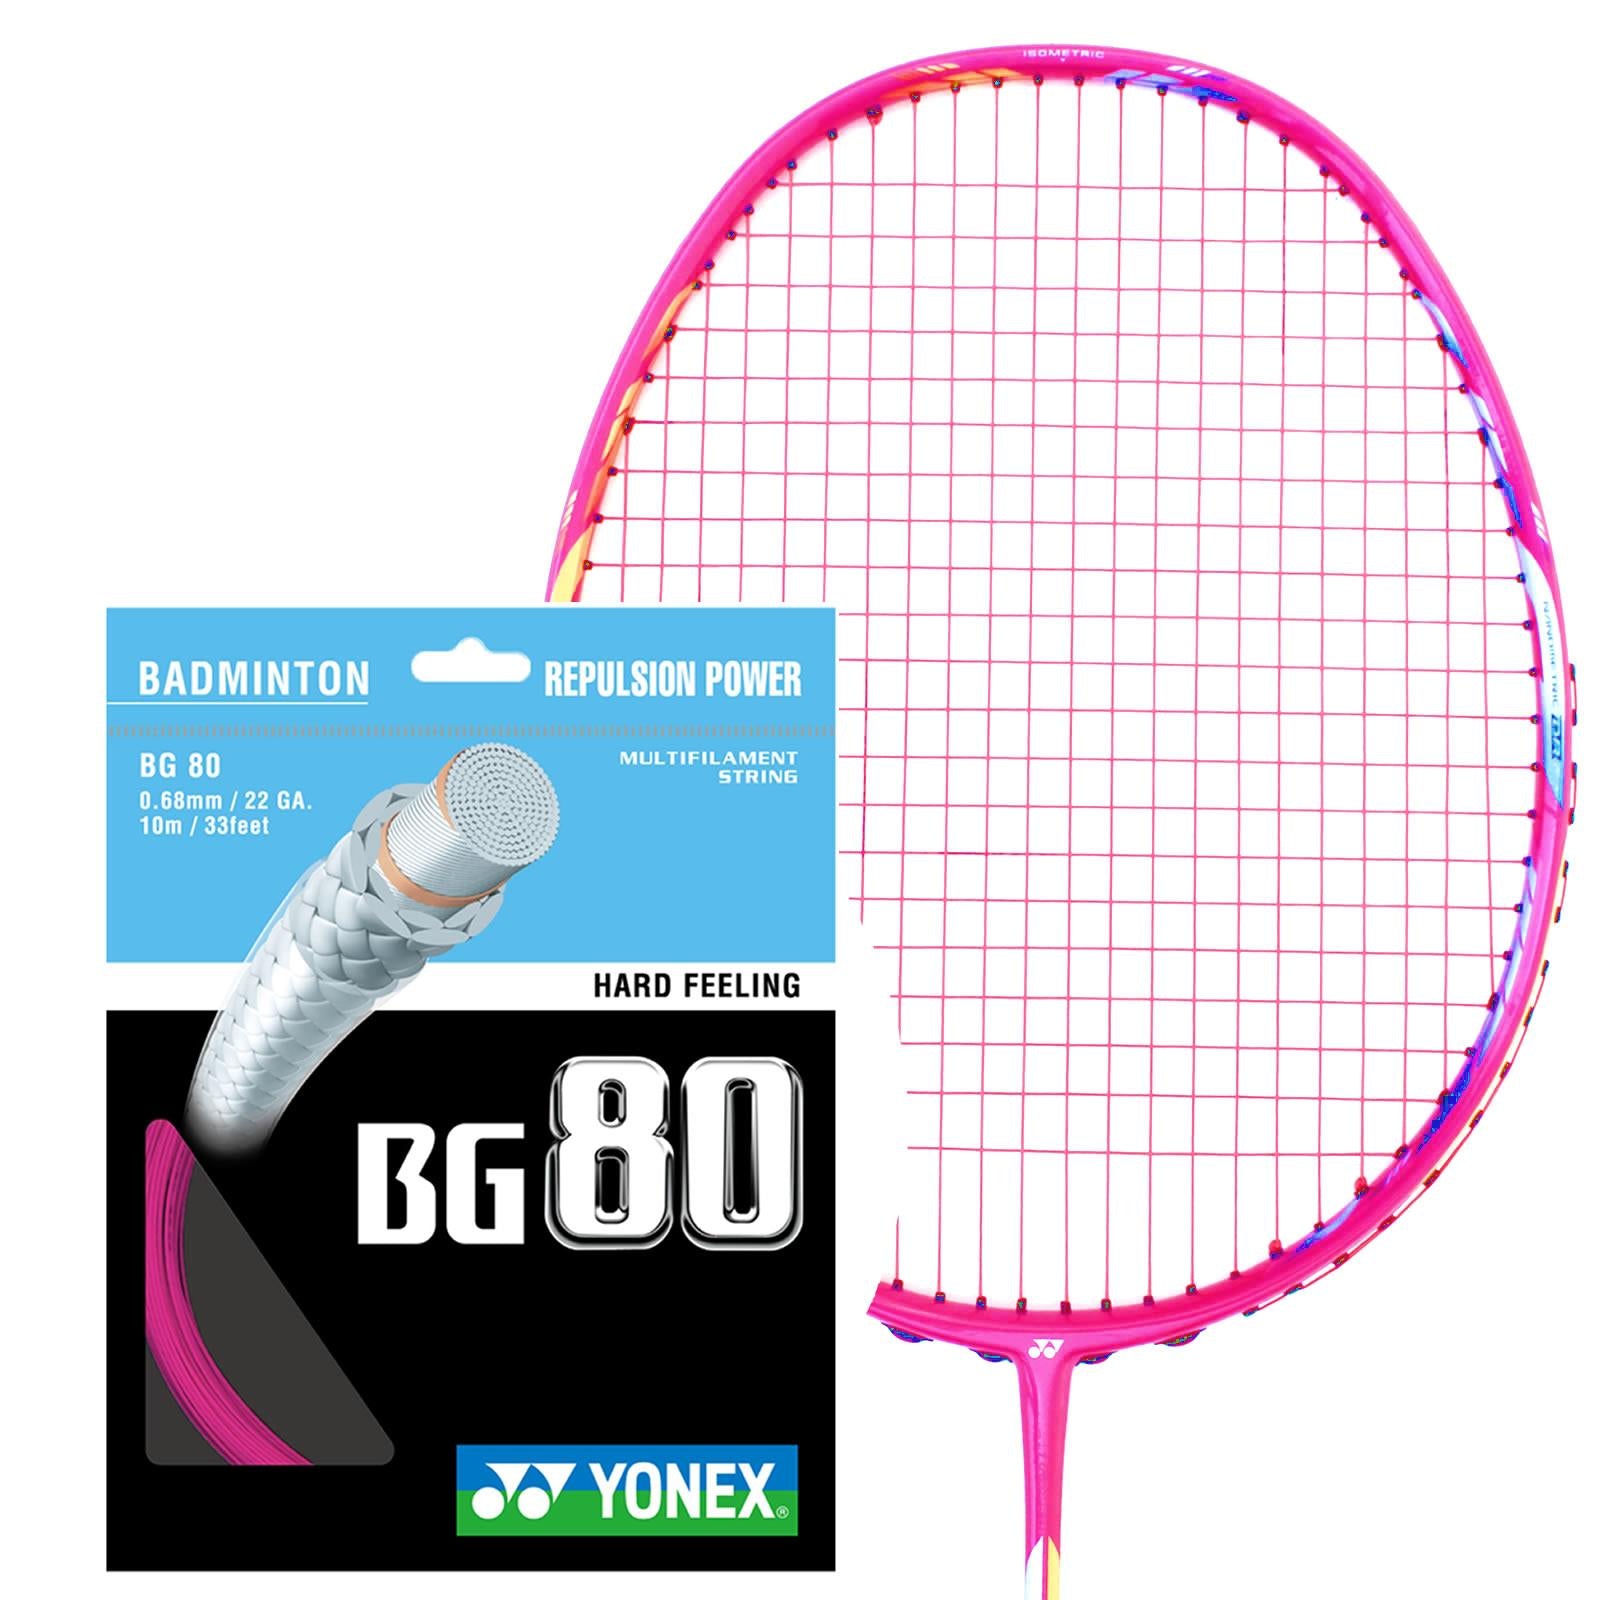 Yonex BG 80 Badminton String Neon Pink - 0.68mm 10m Packet